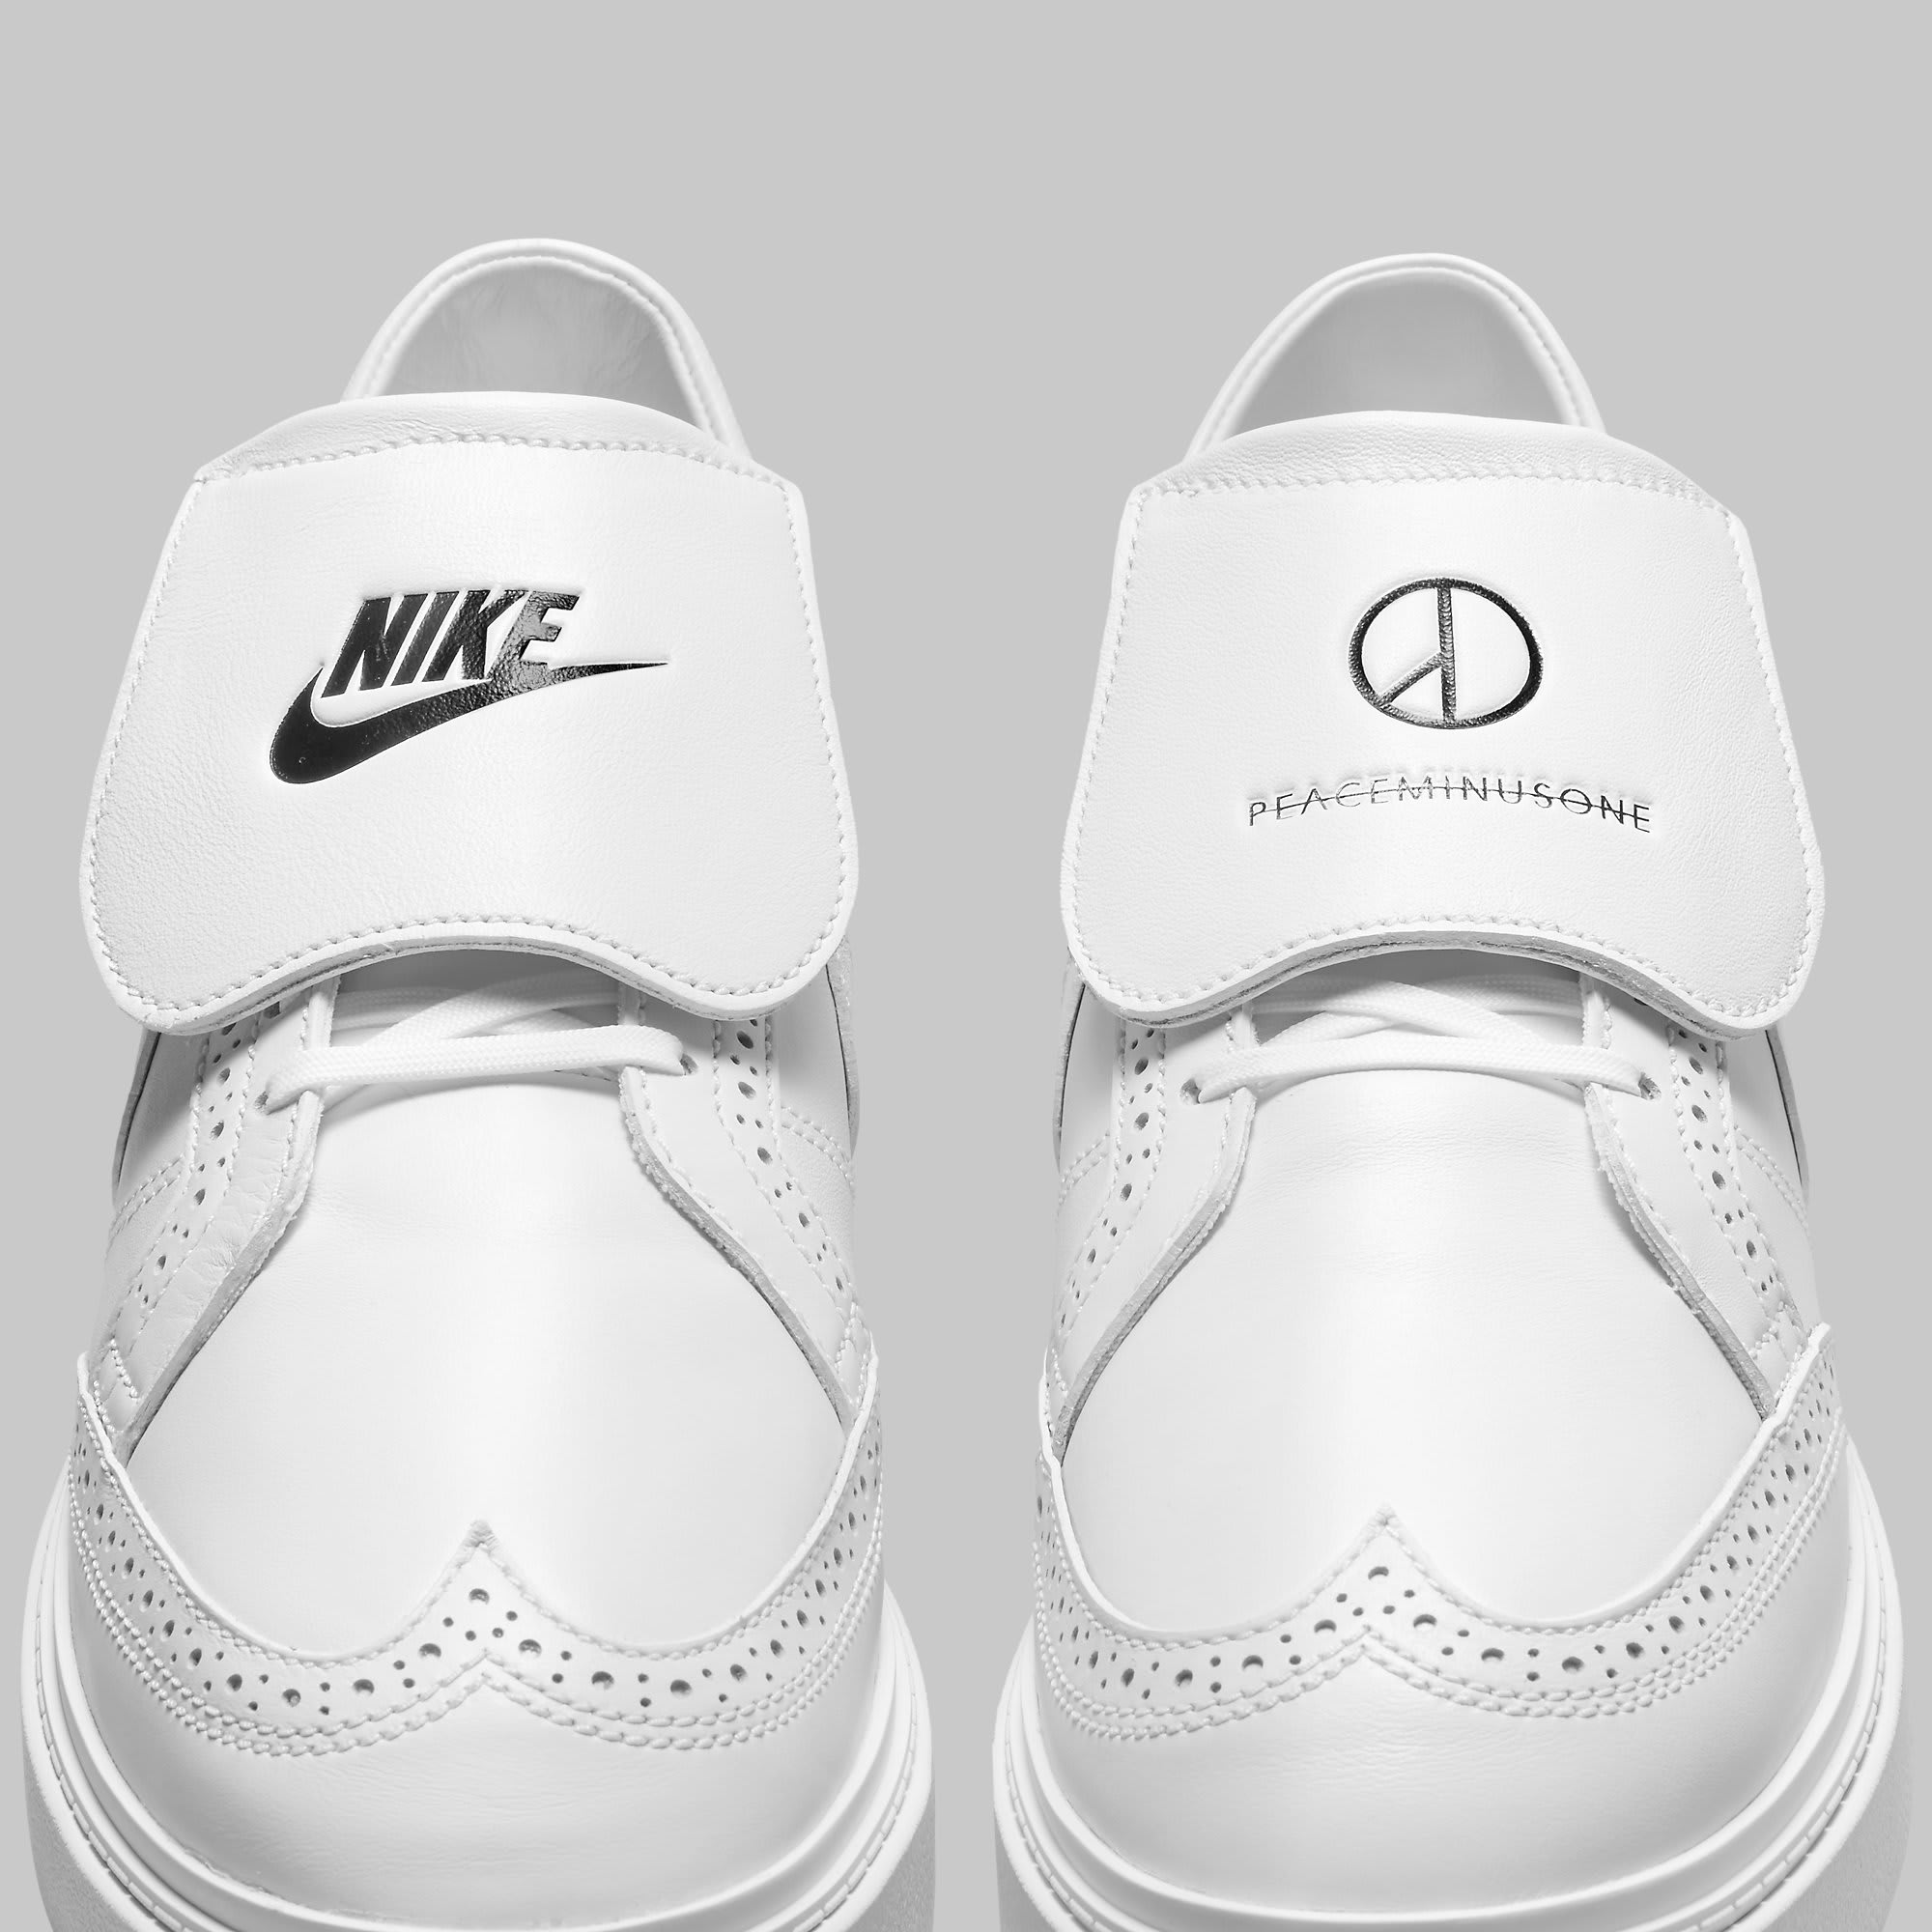 Peaceminusone x Nike Kwondo 1 DH2482 100 (Front)